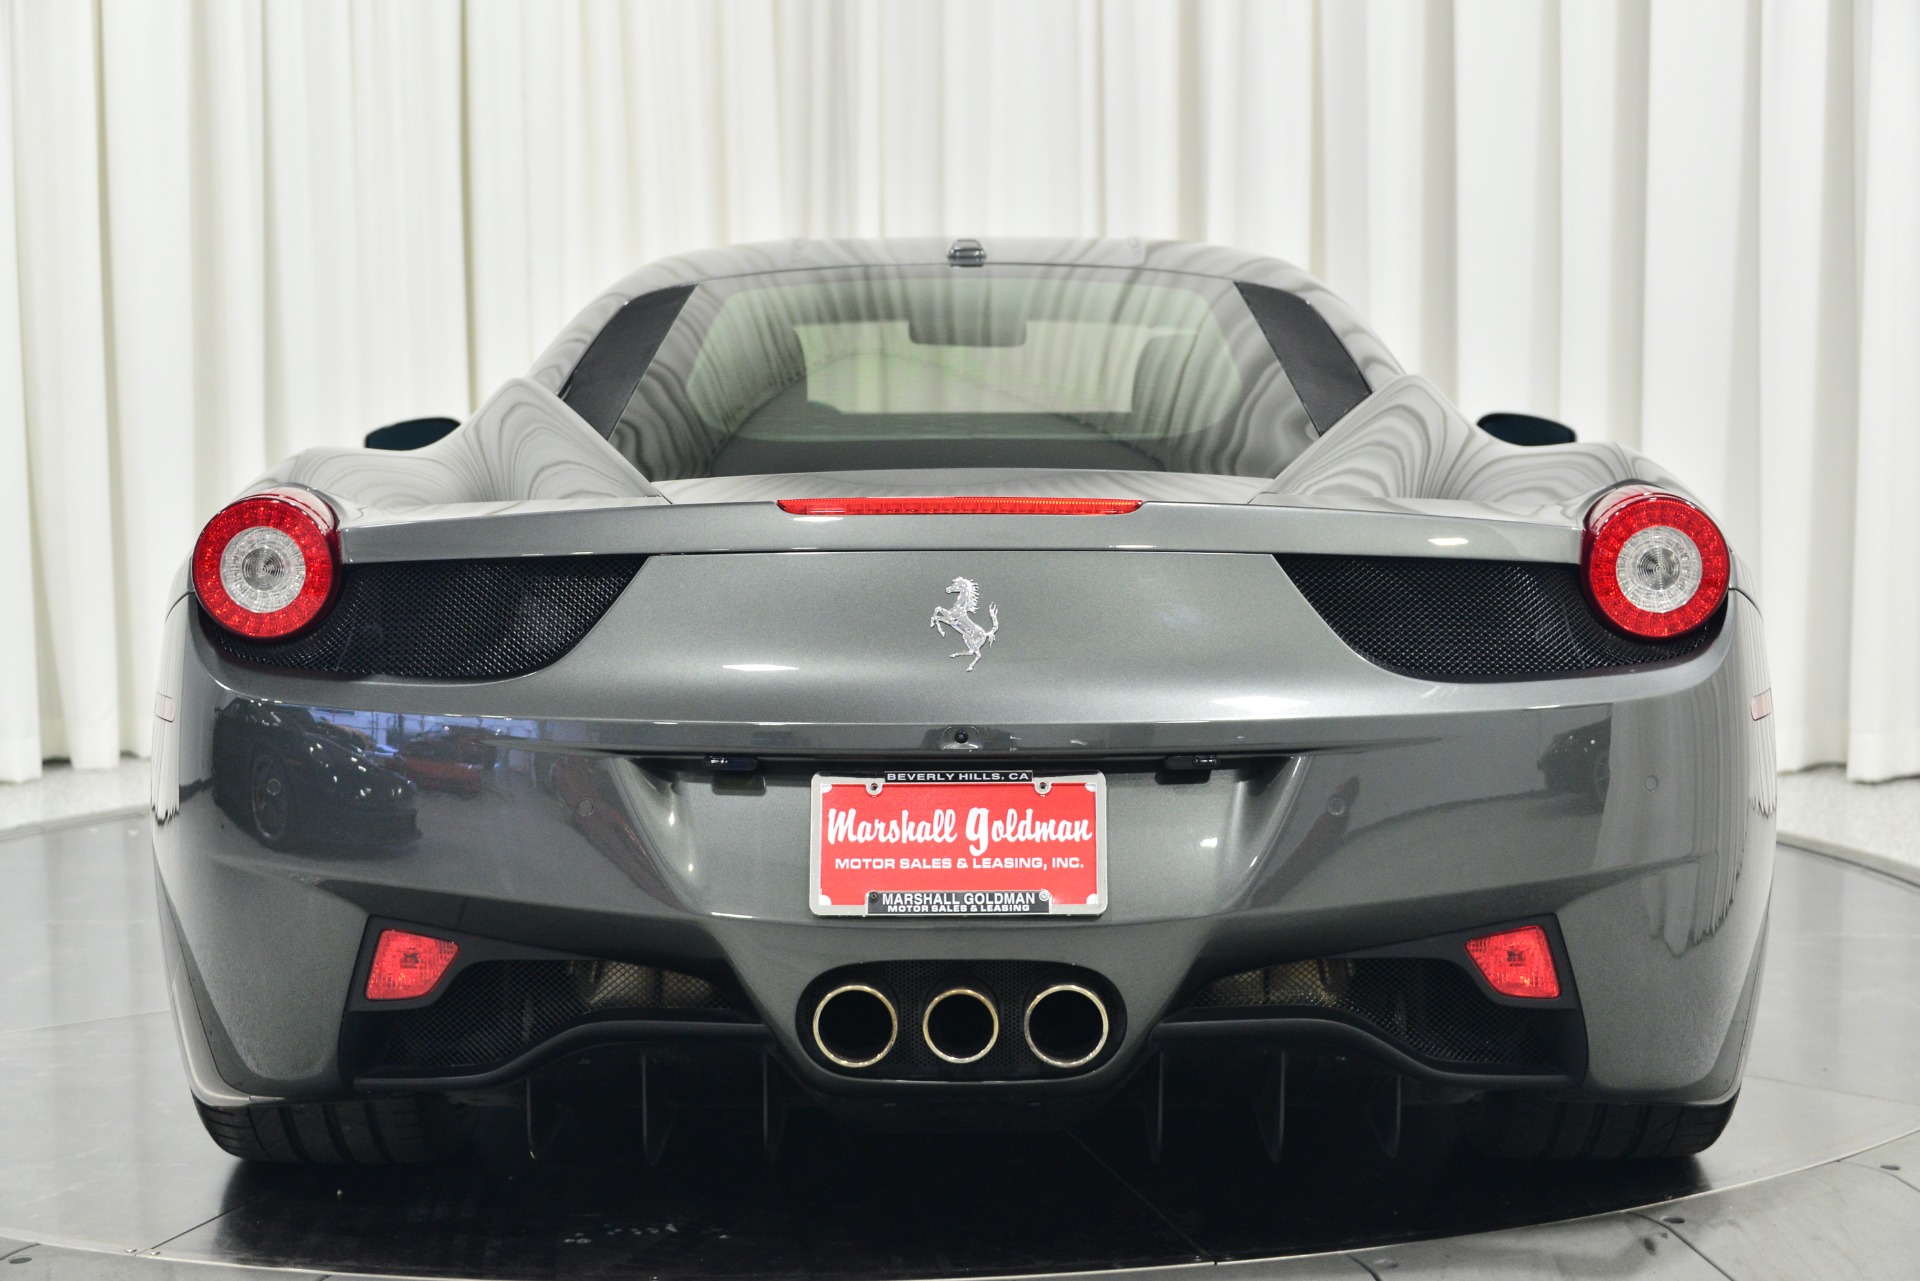 Ferrari 458 Italia 2013 por R$ 2.400.000, Curitiba, PR - ID